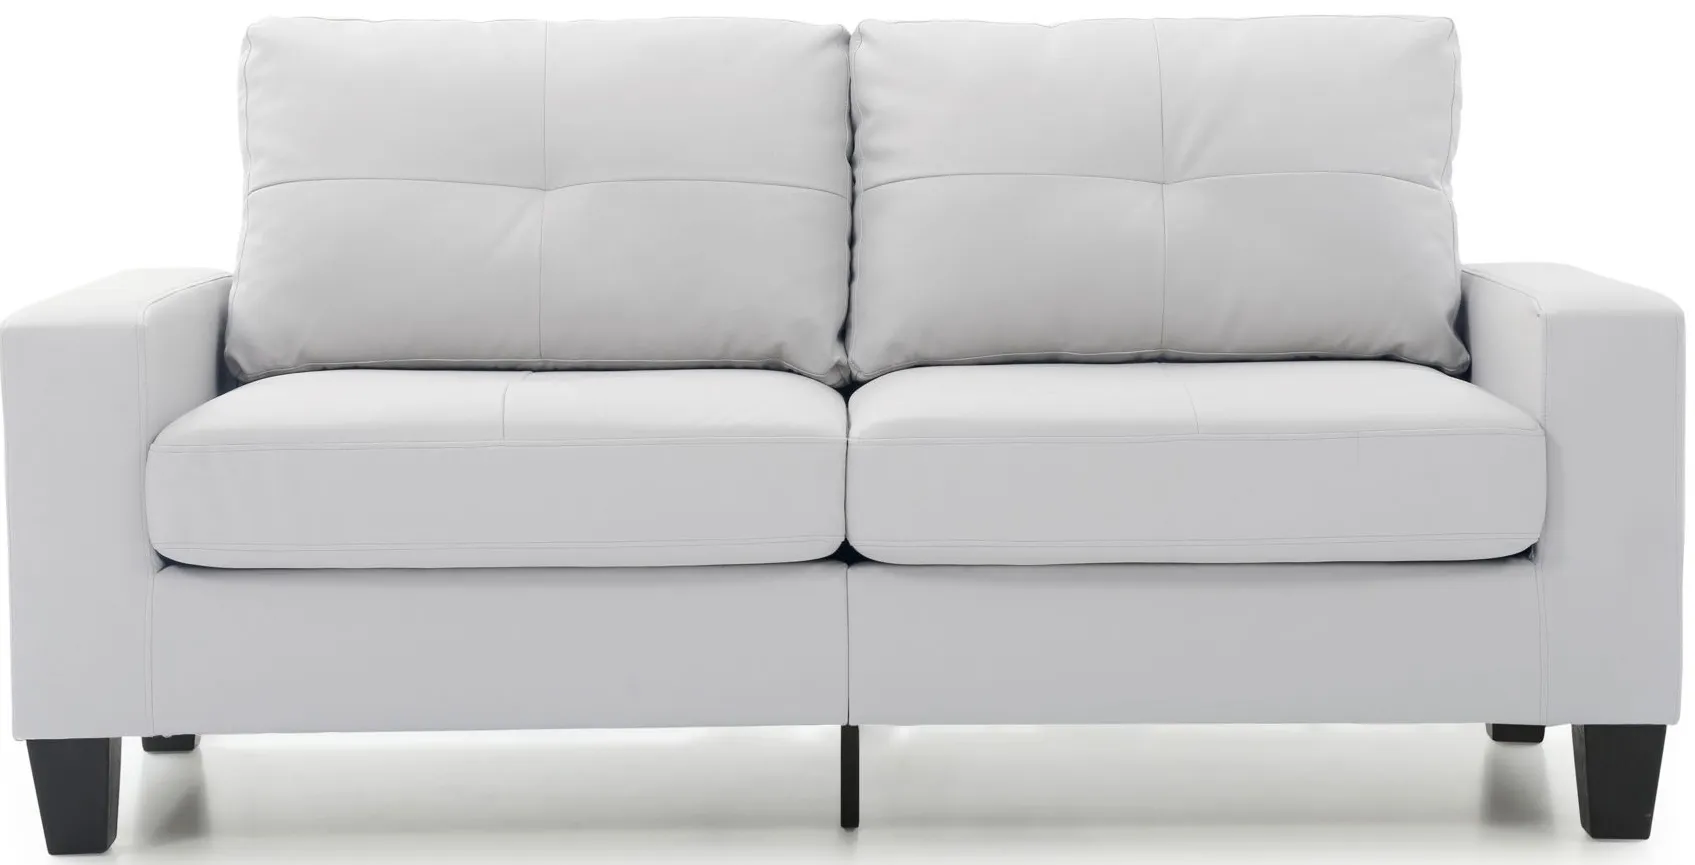 Newbury Modular Sofa by Glory Furniture in White by Glory Furniture